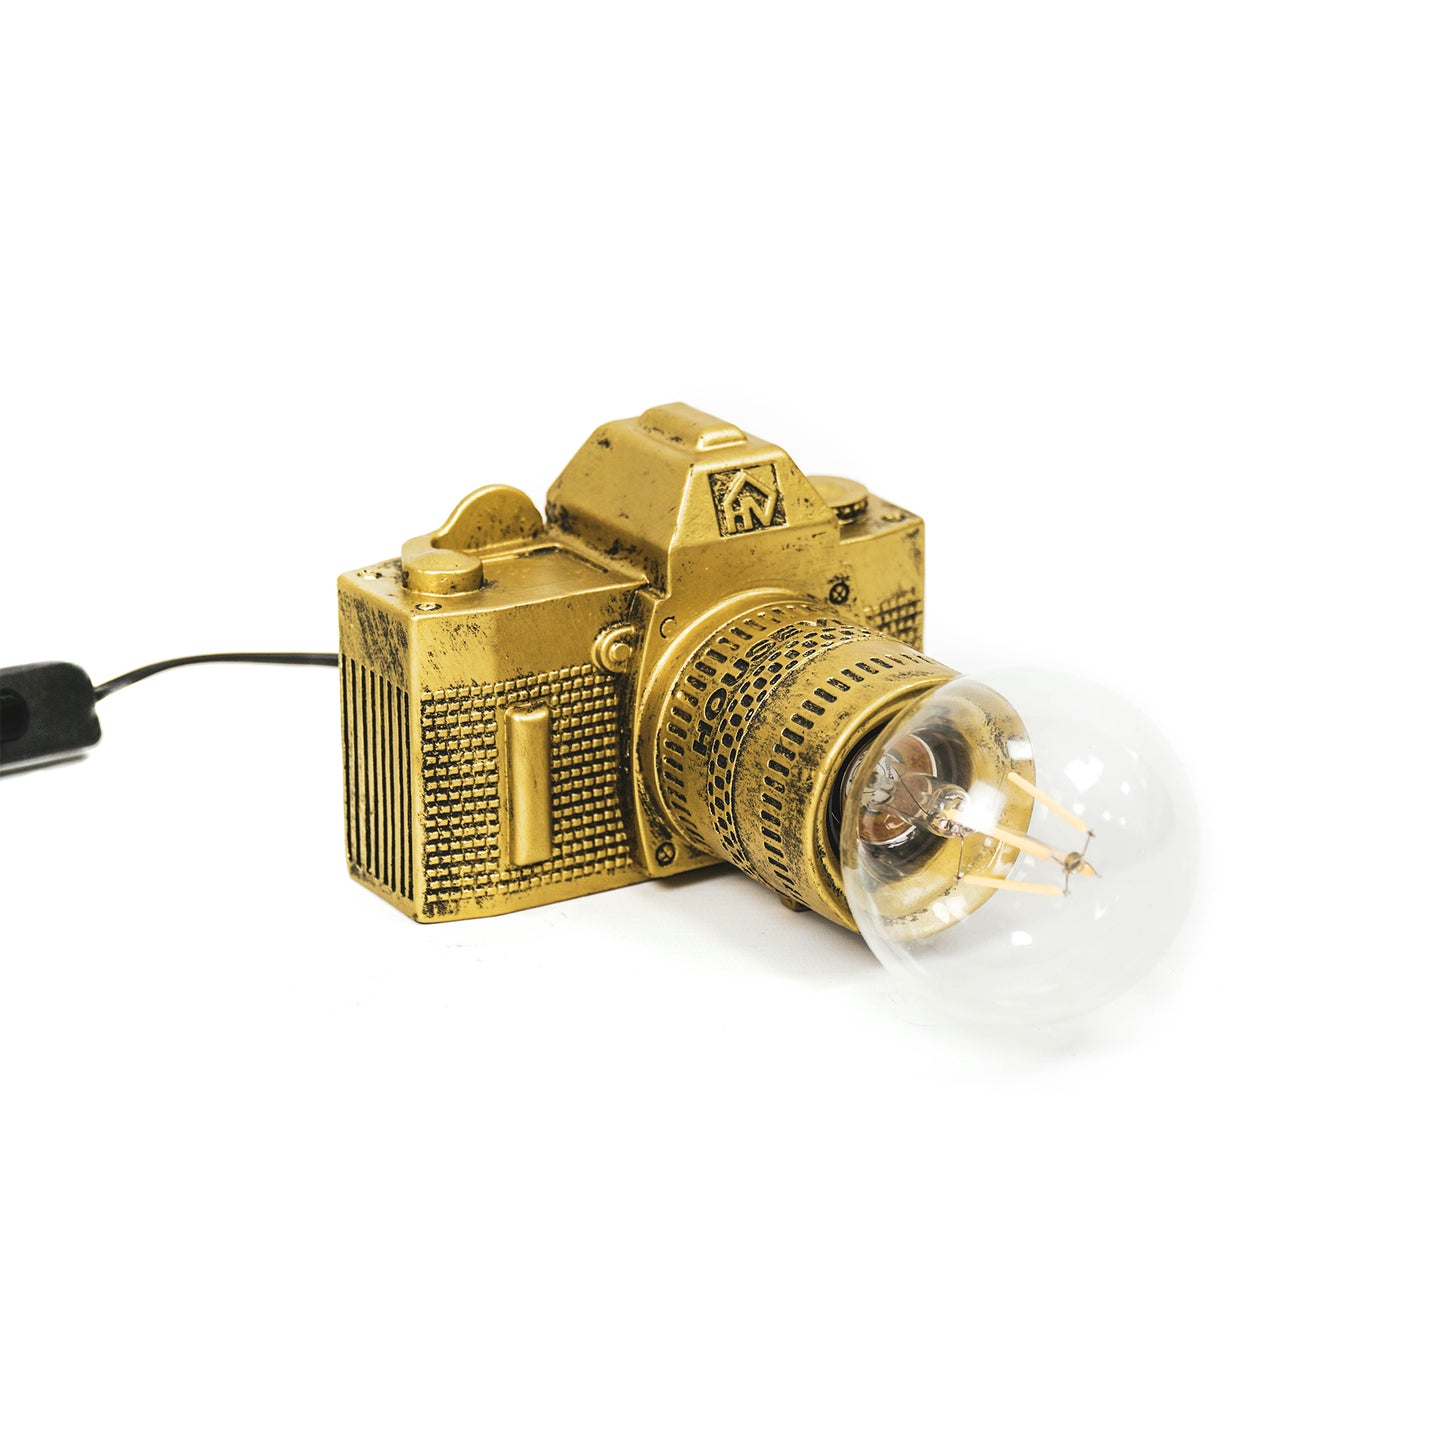 HV Camera Lamp - 15x12cm - Gold